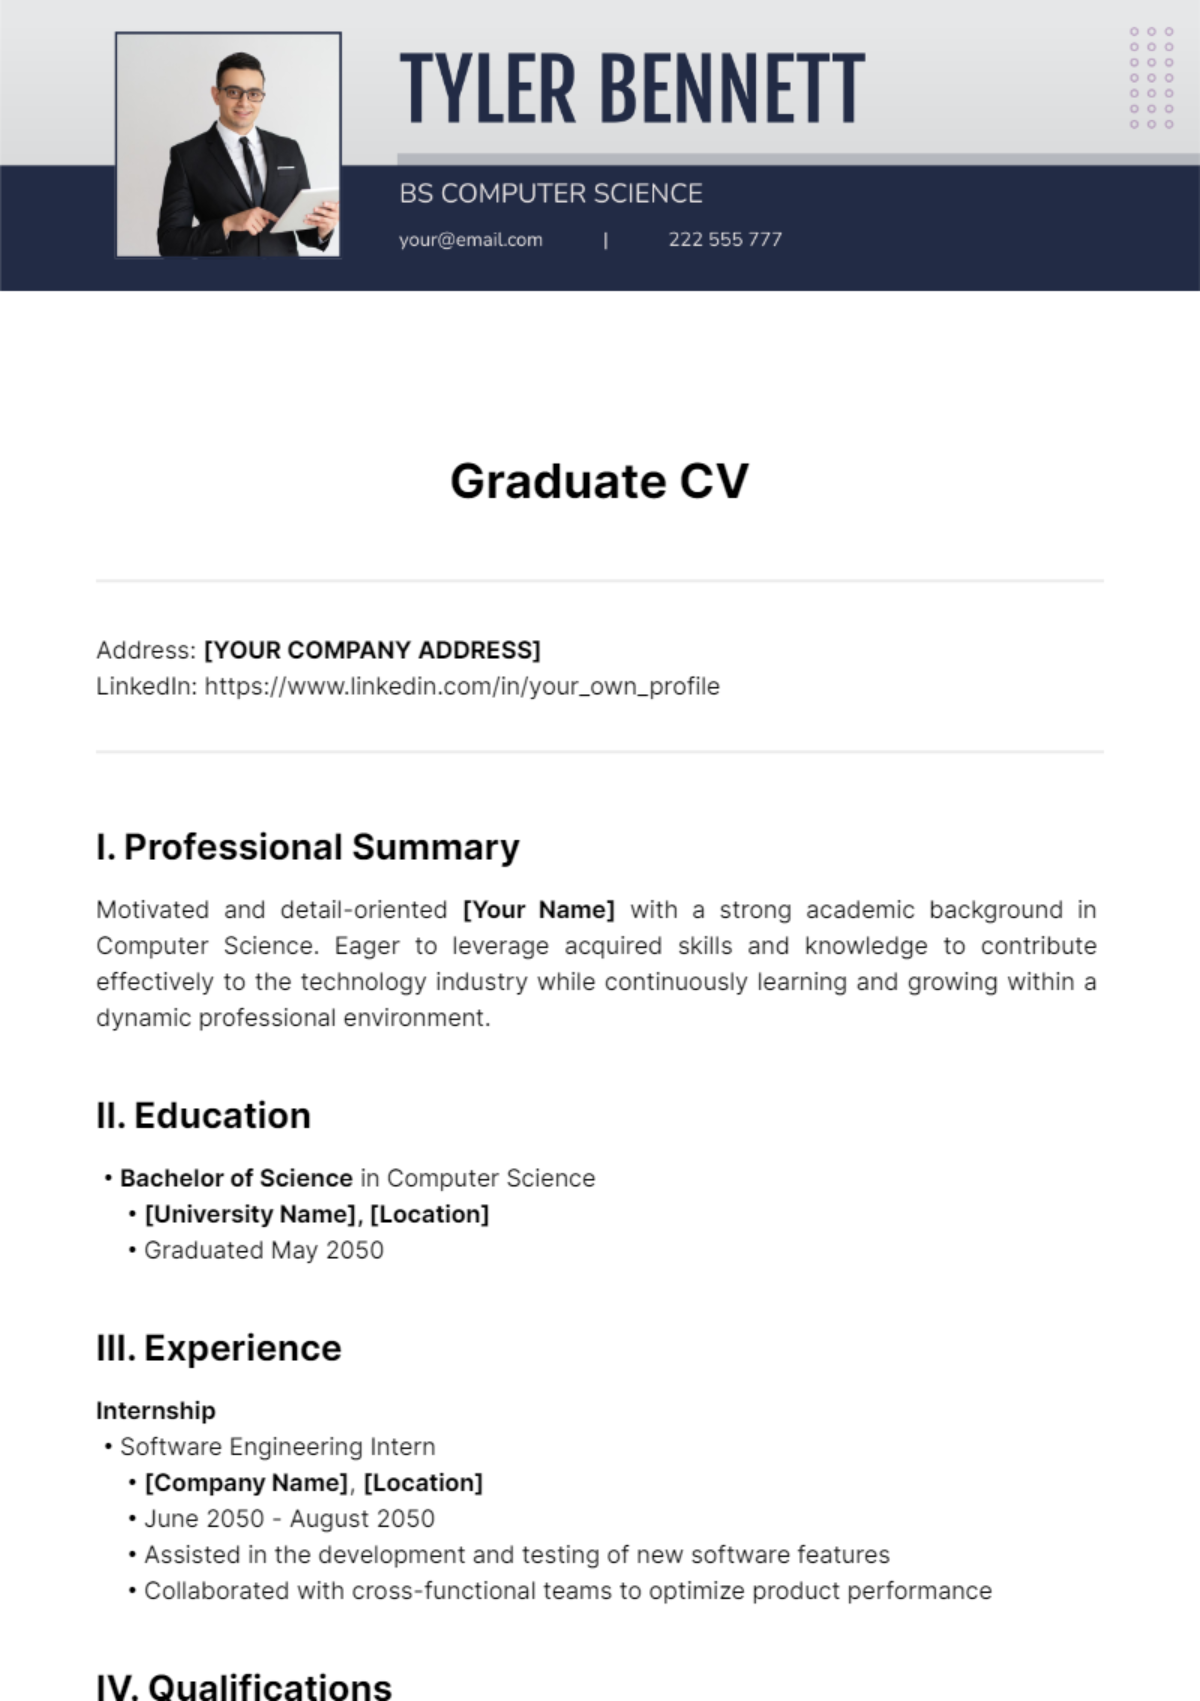 Graduate CV Template